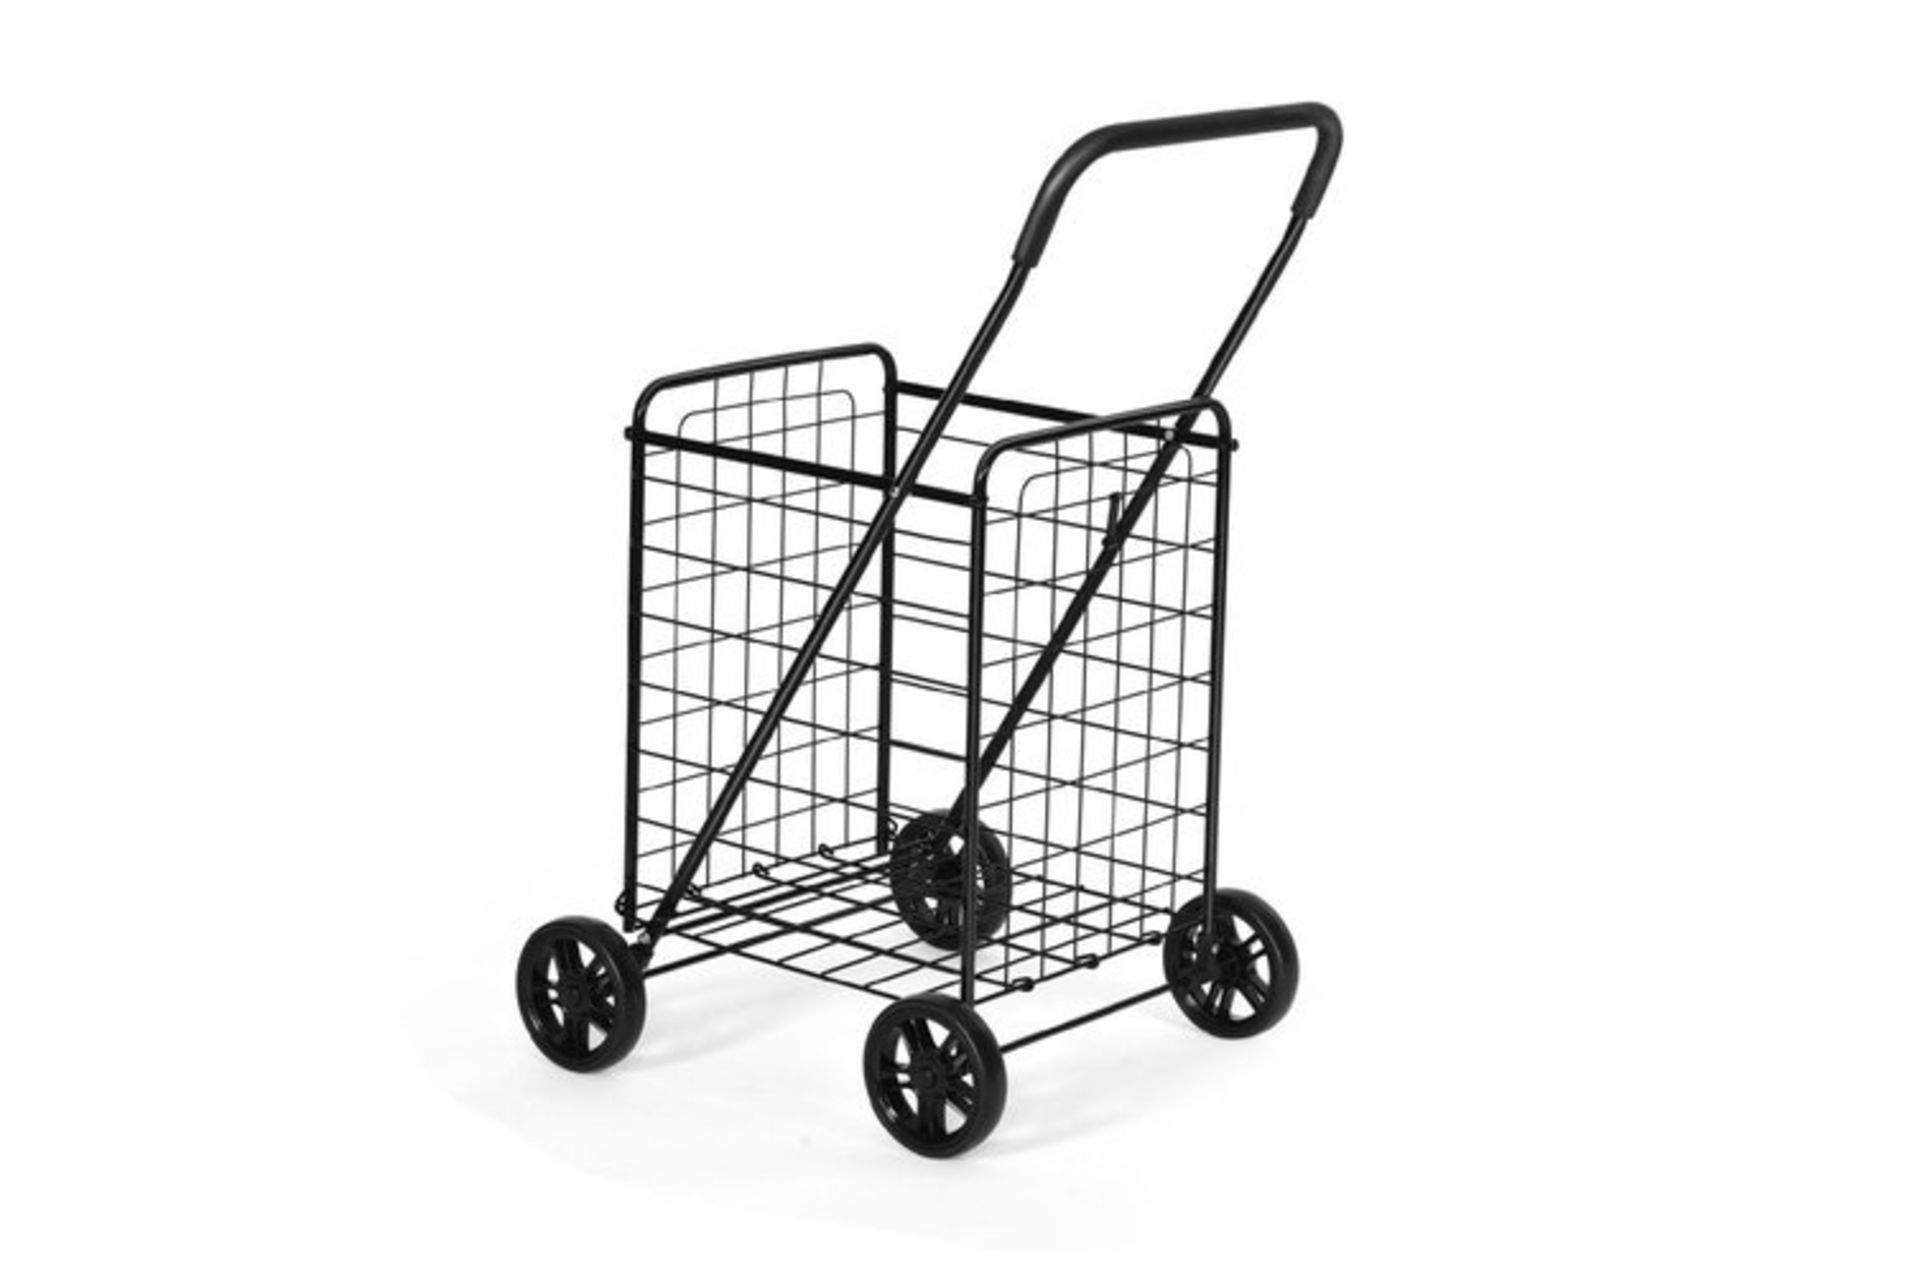 Foldable Shopping Trolley Metal Rolling Grocery Basket Ultility Cart, Black - ER53